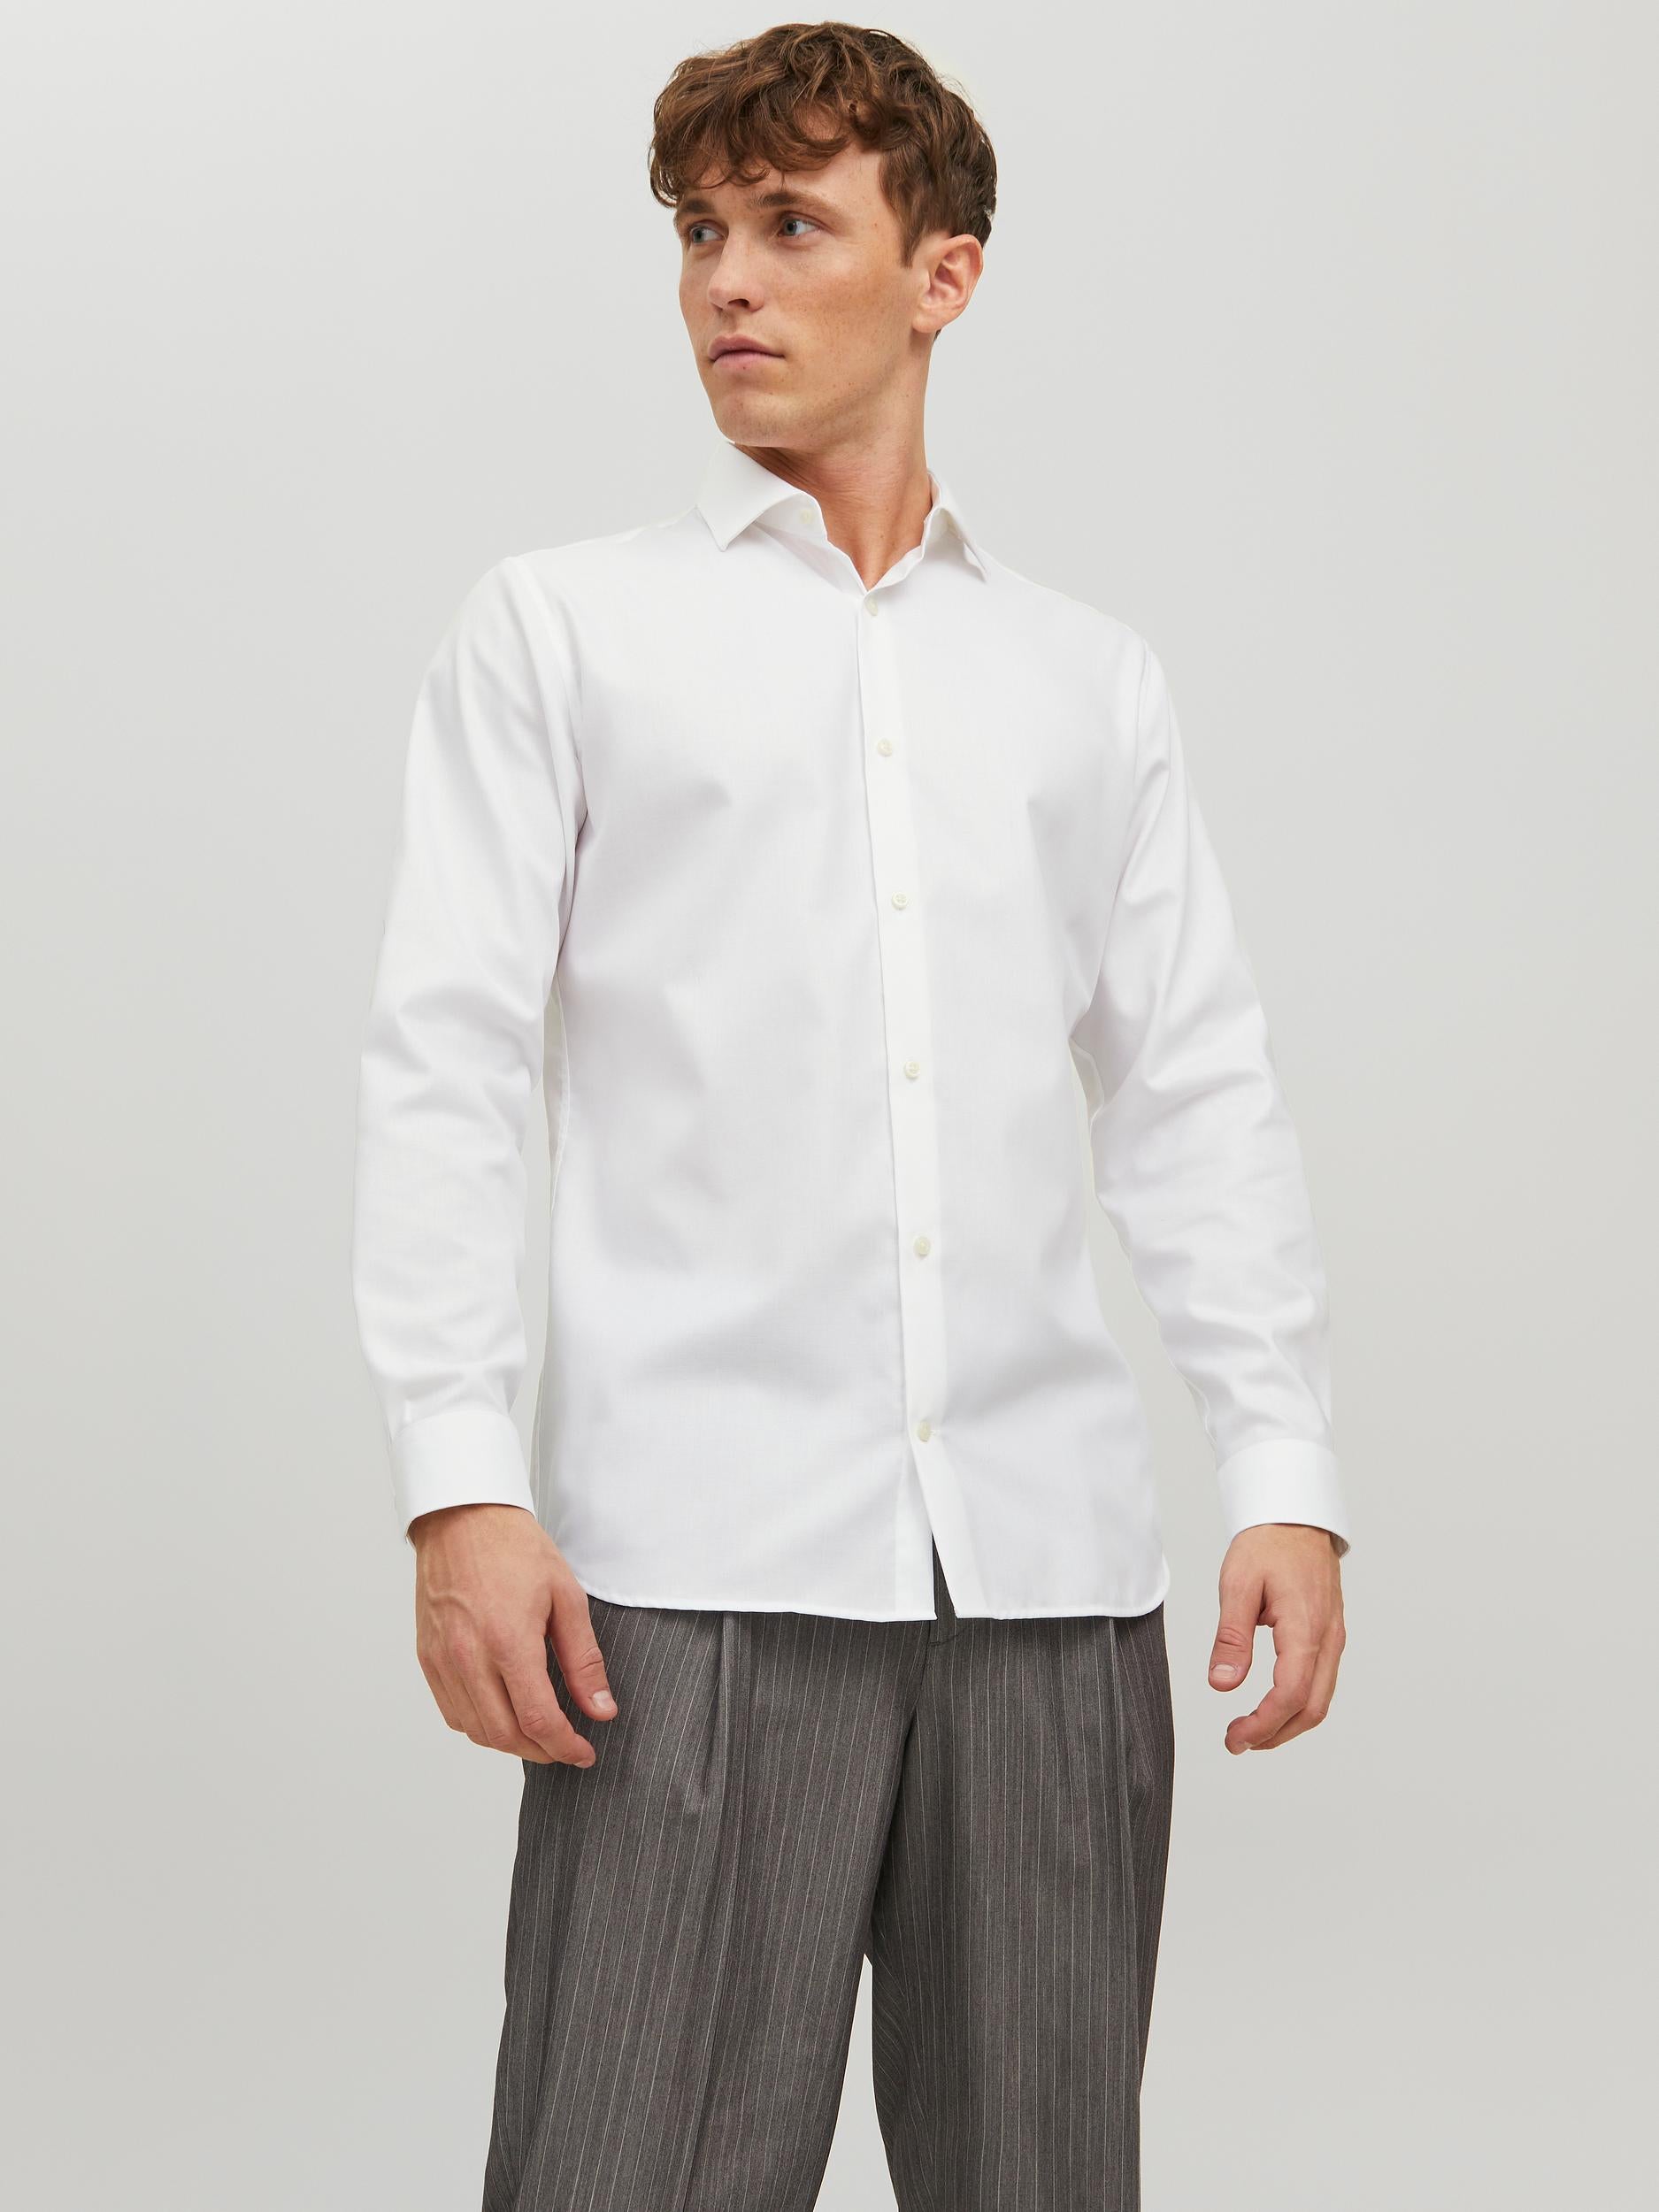 Men's Parker White Shirt-Front View